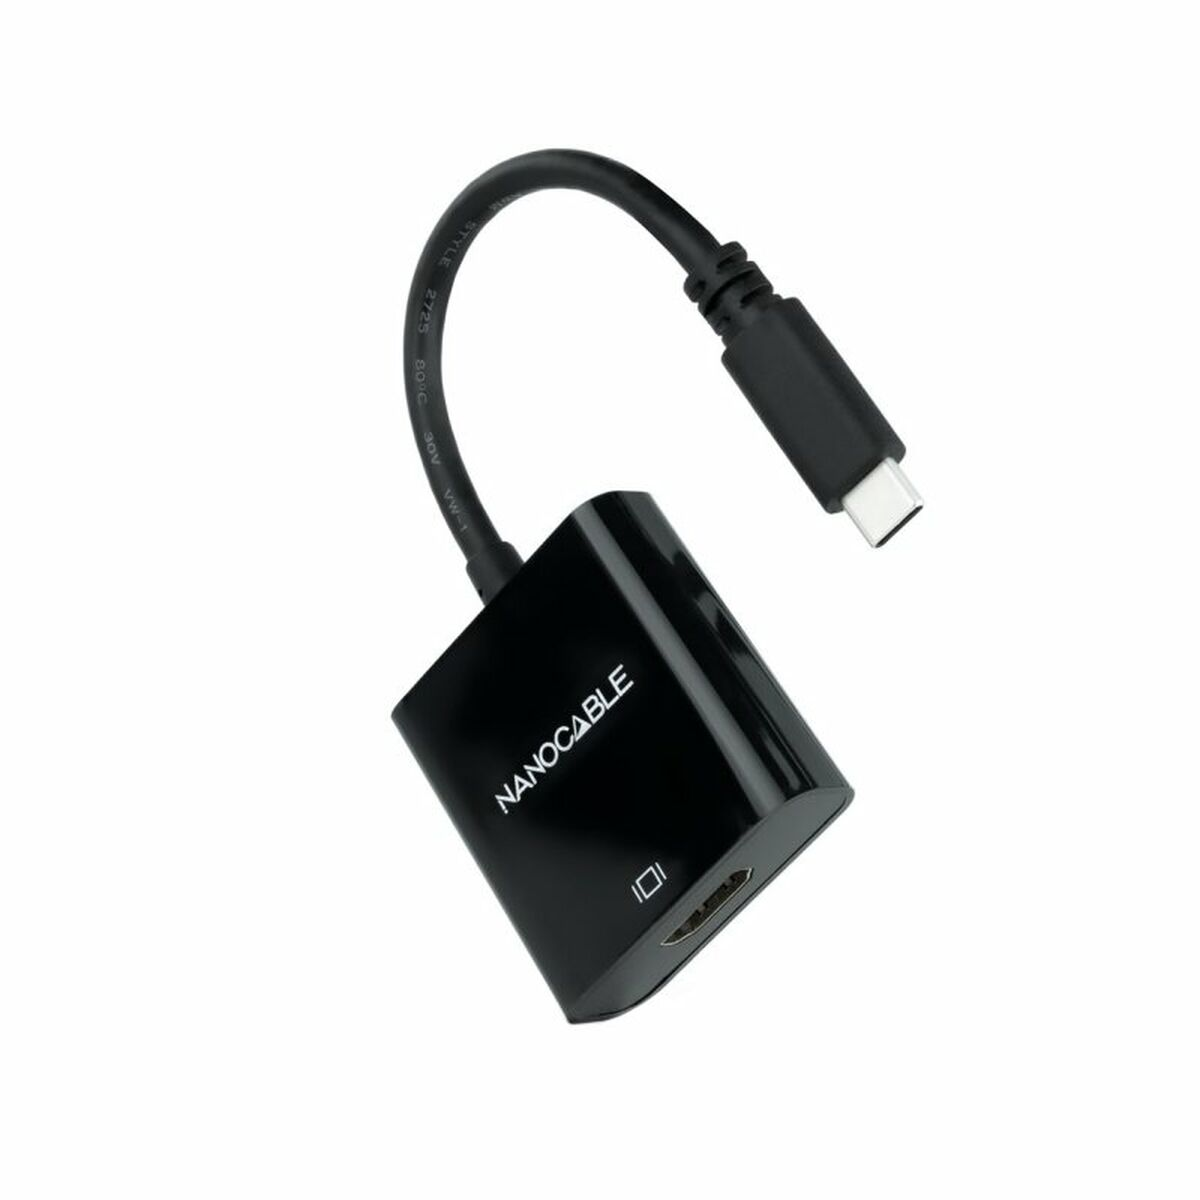 NANOCABLE 10.16.4102-BK USB-C-zu-HDMI-Adapter